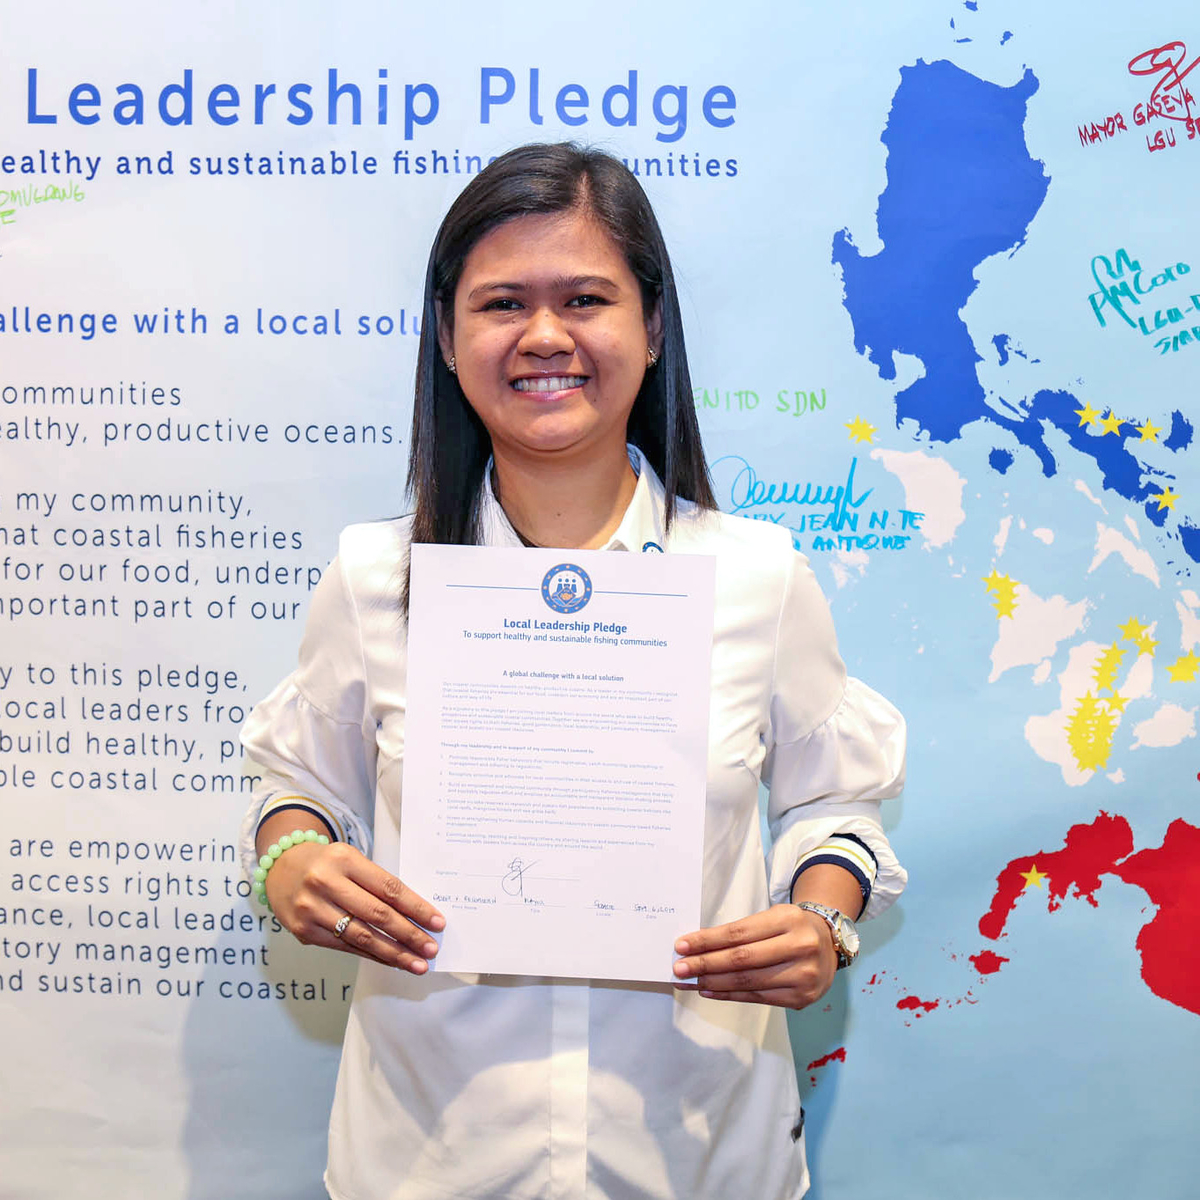 Mayor of Sebaste, Philippines, Gaseva Recopuerto with signed public pledge and pin.